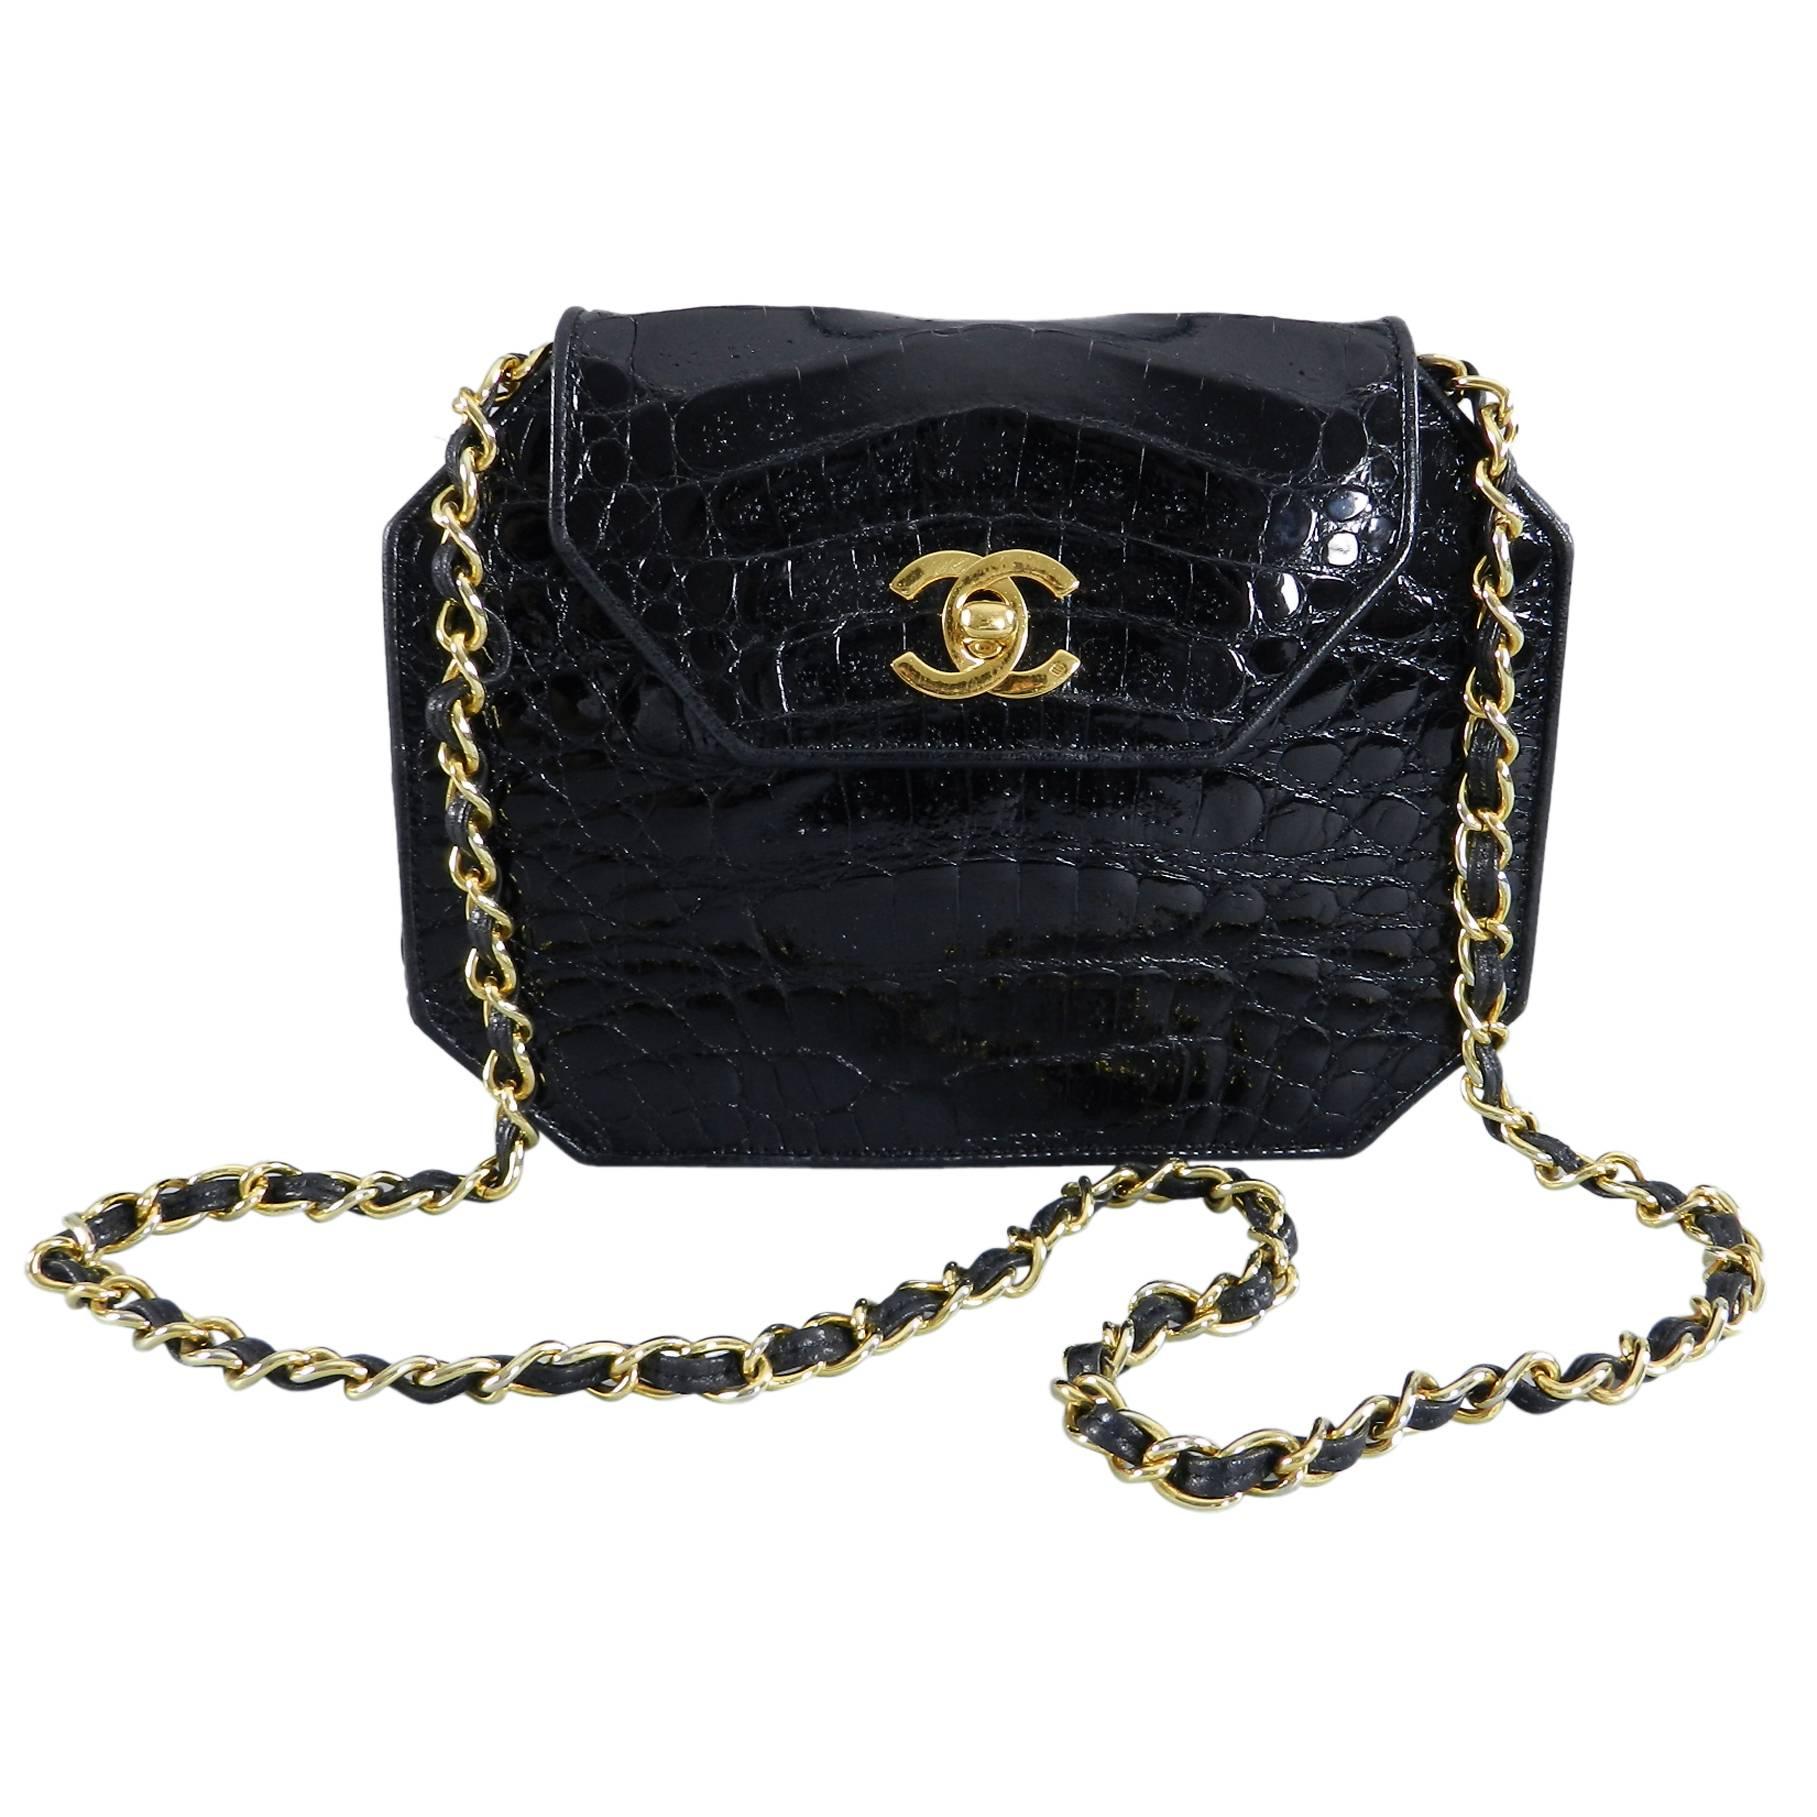 Chanel Black Crocodile Octagonal Purse with Chain Strap